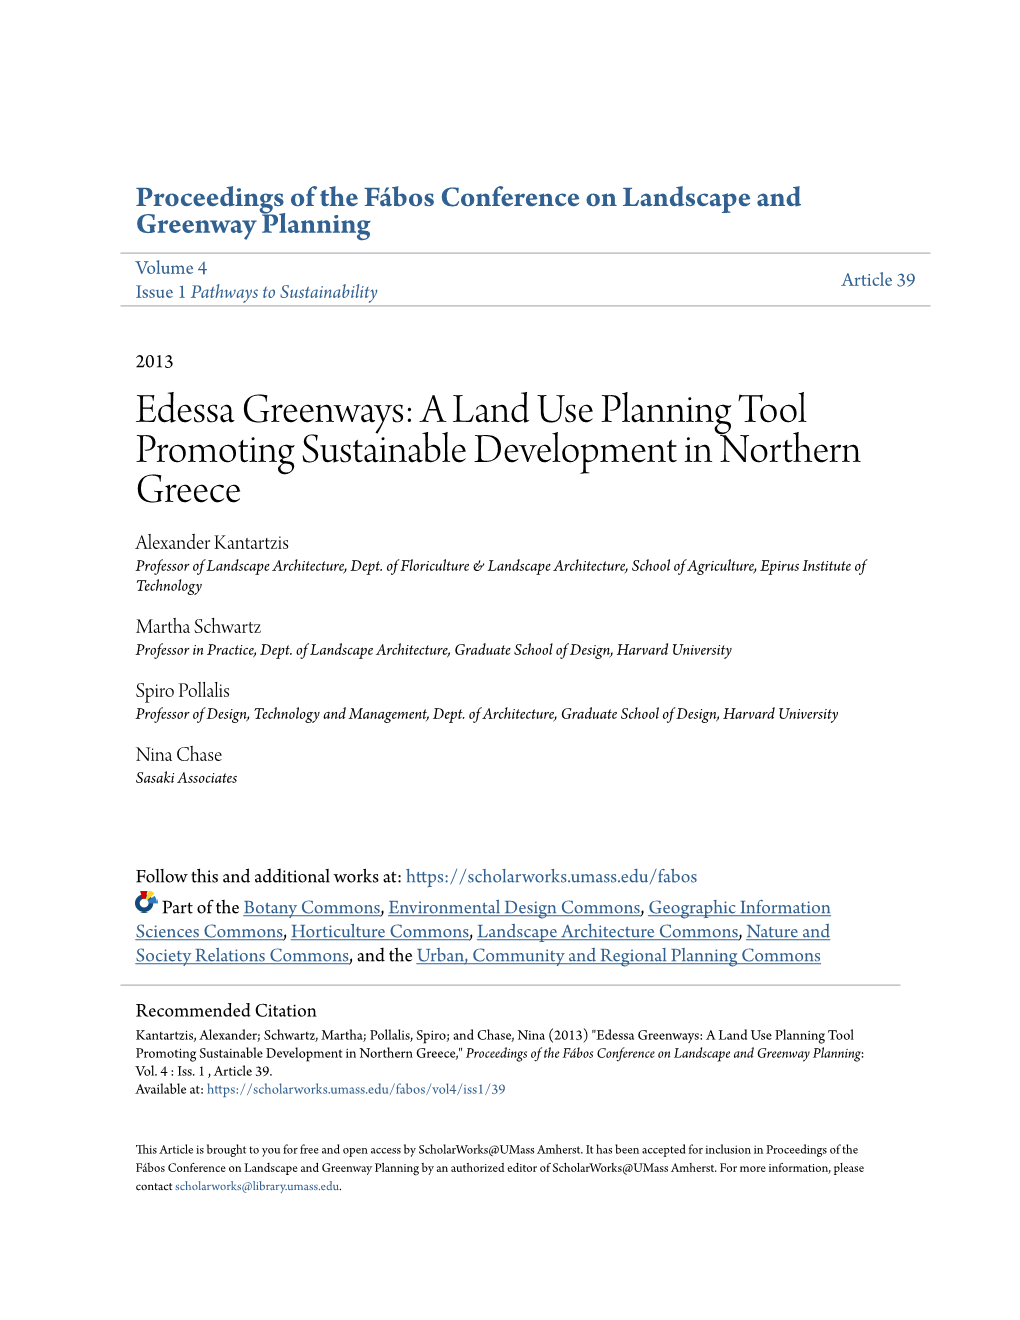 Edessa Greenways: a Land Use Planning Tool Promoting Sustainable Development in Northern Greece Alexander Kantartzis Professor of Landscape Architecture, Dept